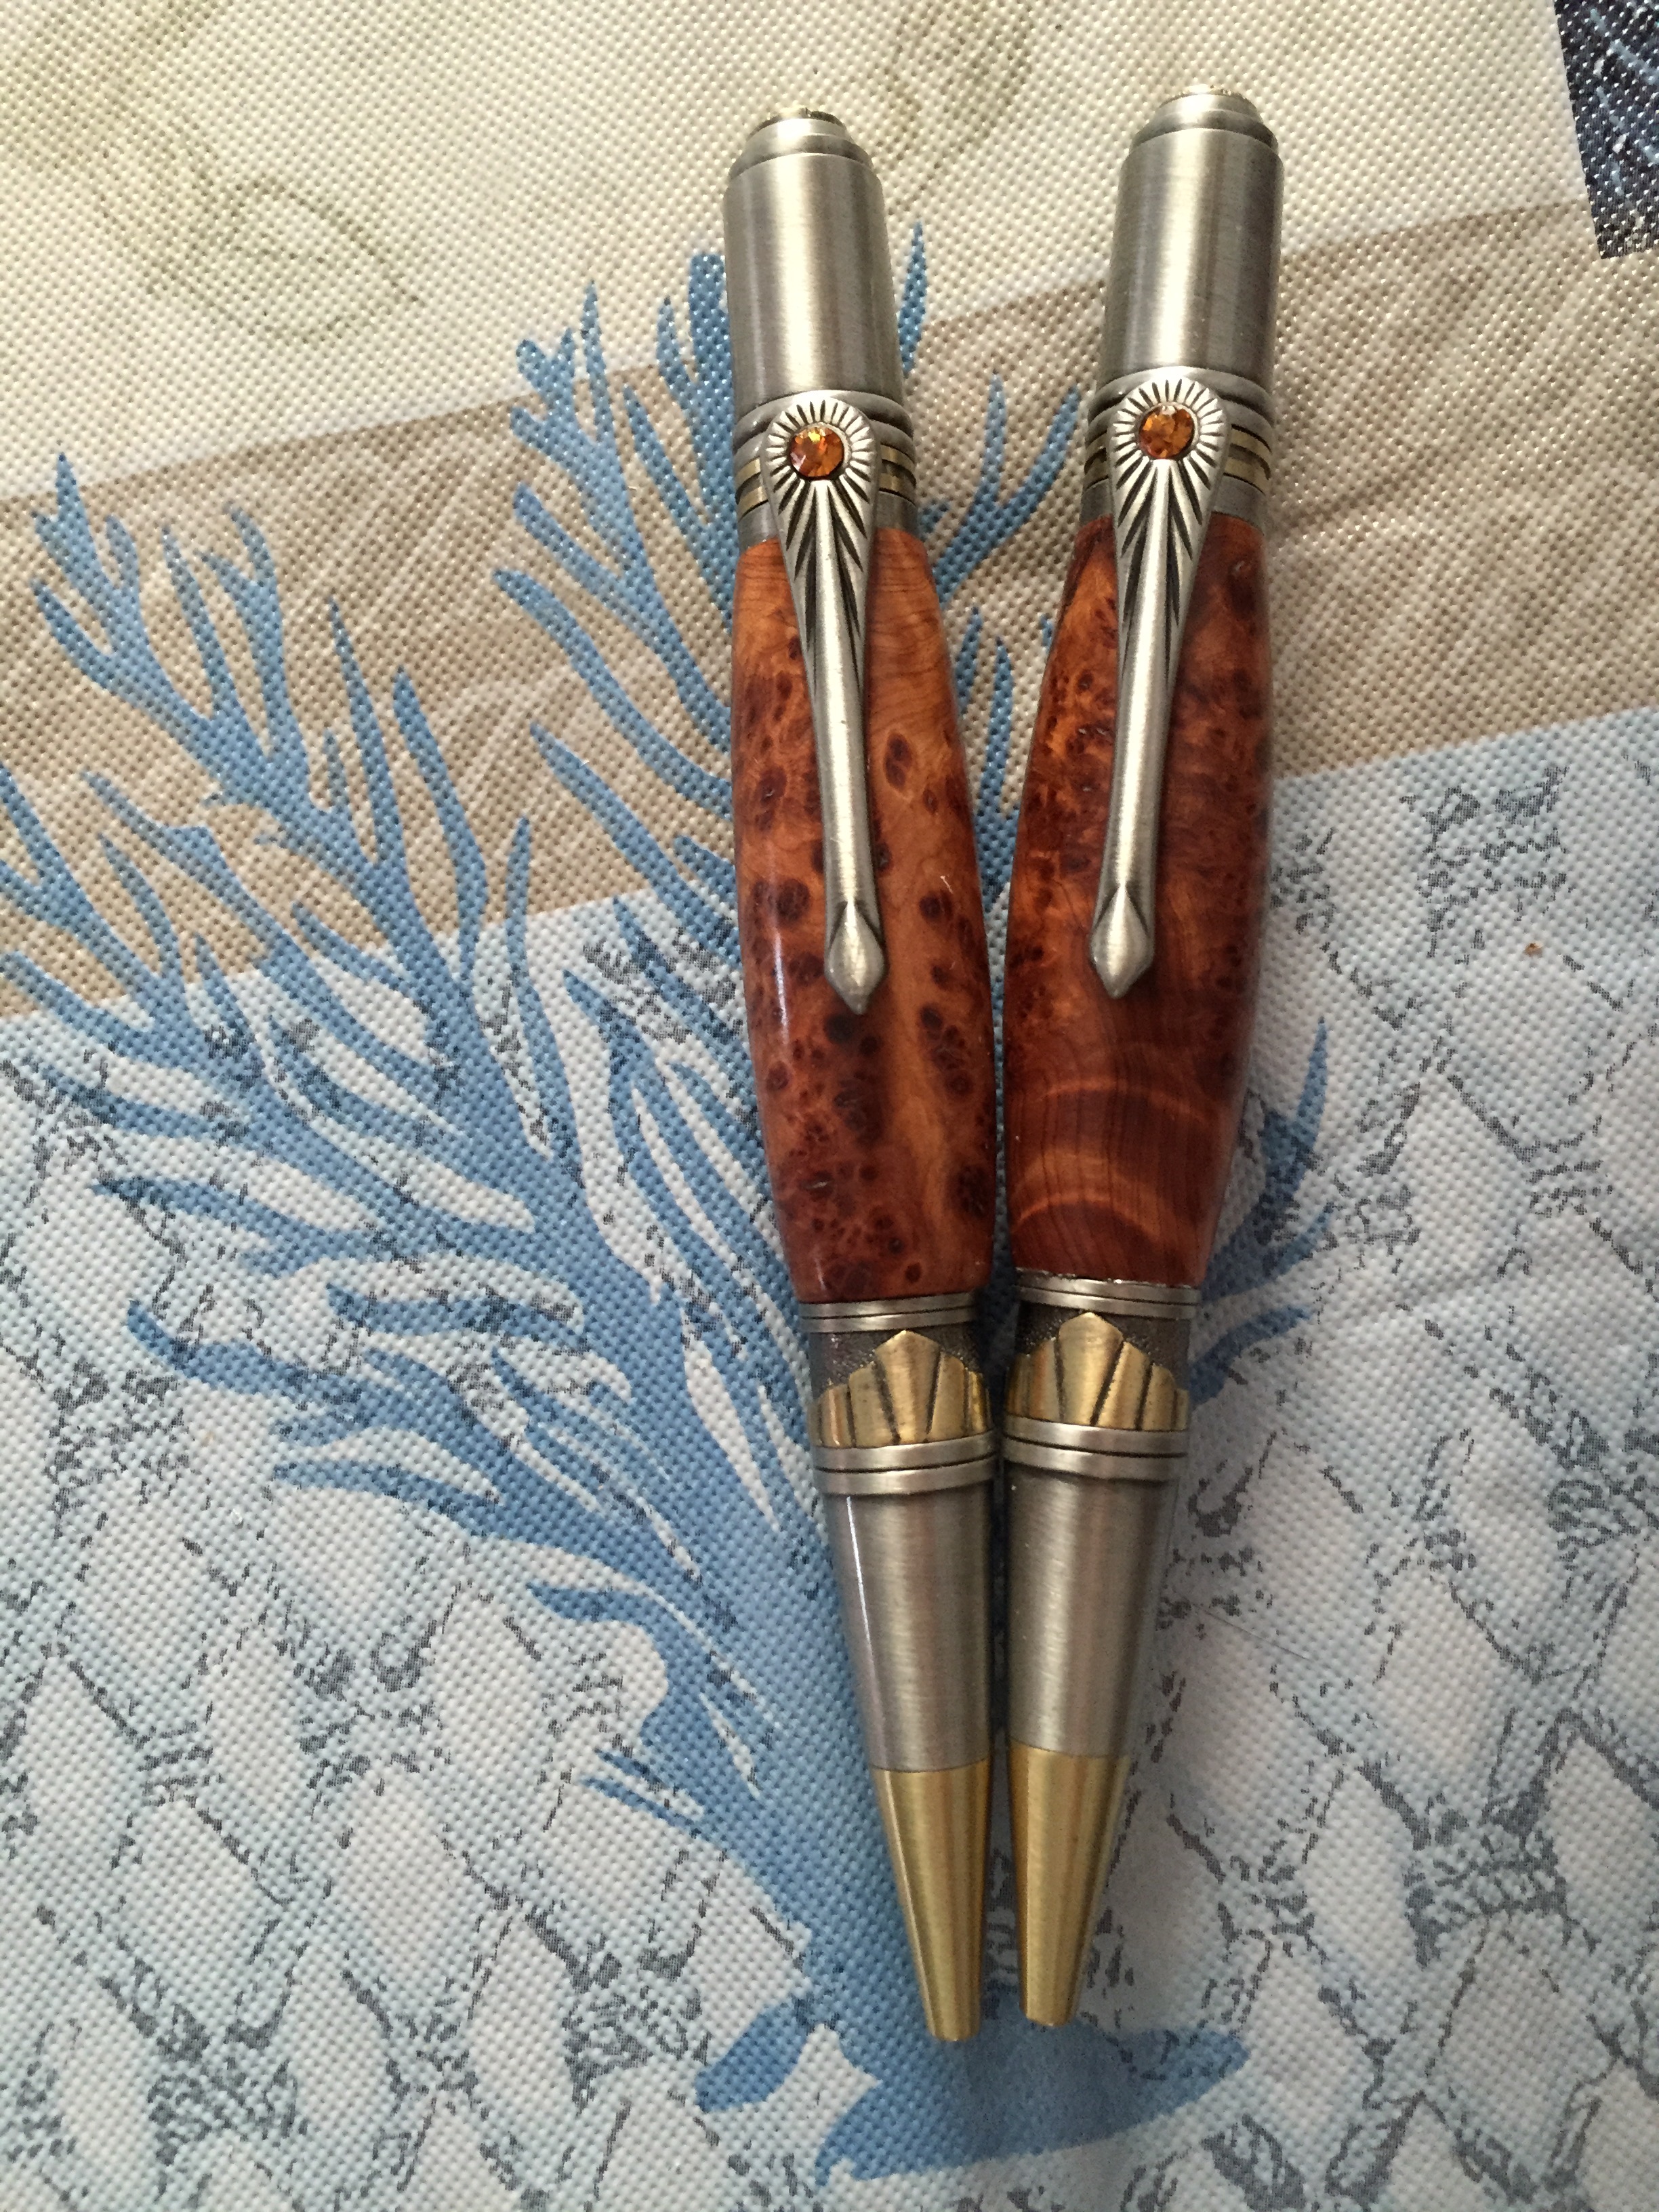 A brace of Broadwell Art Deco pens